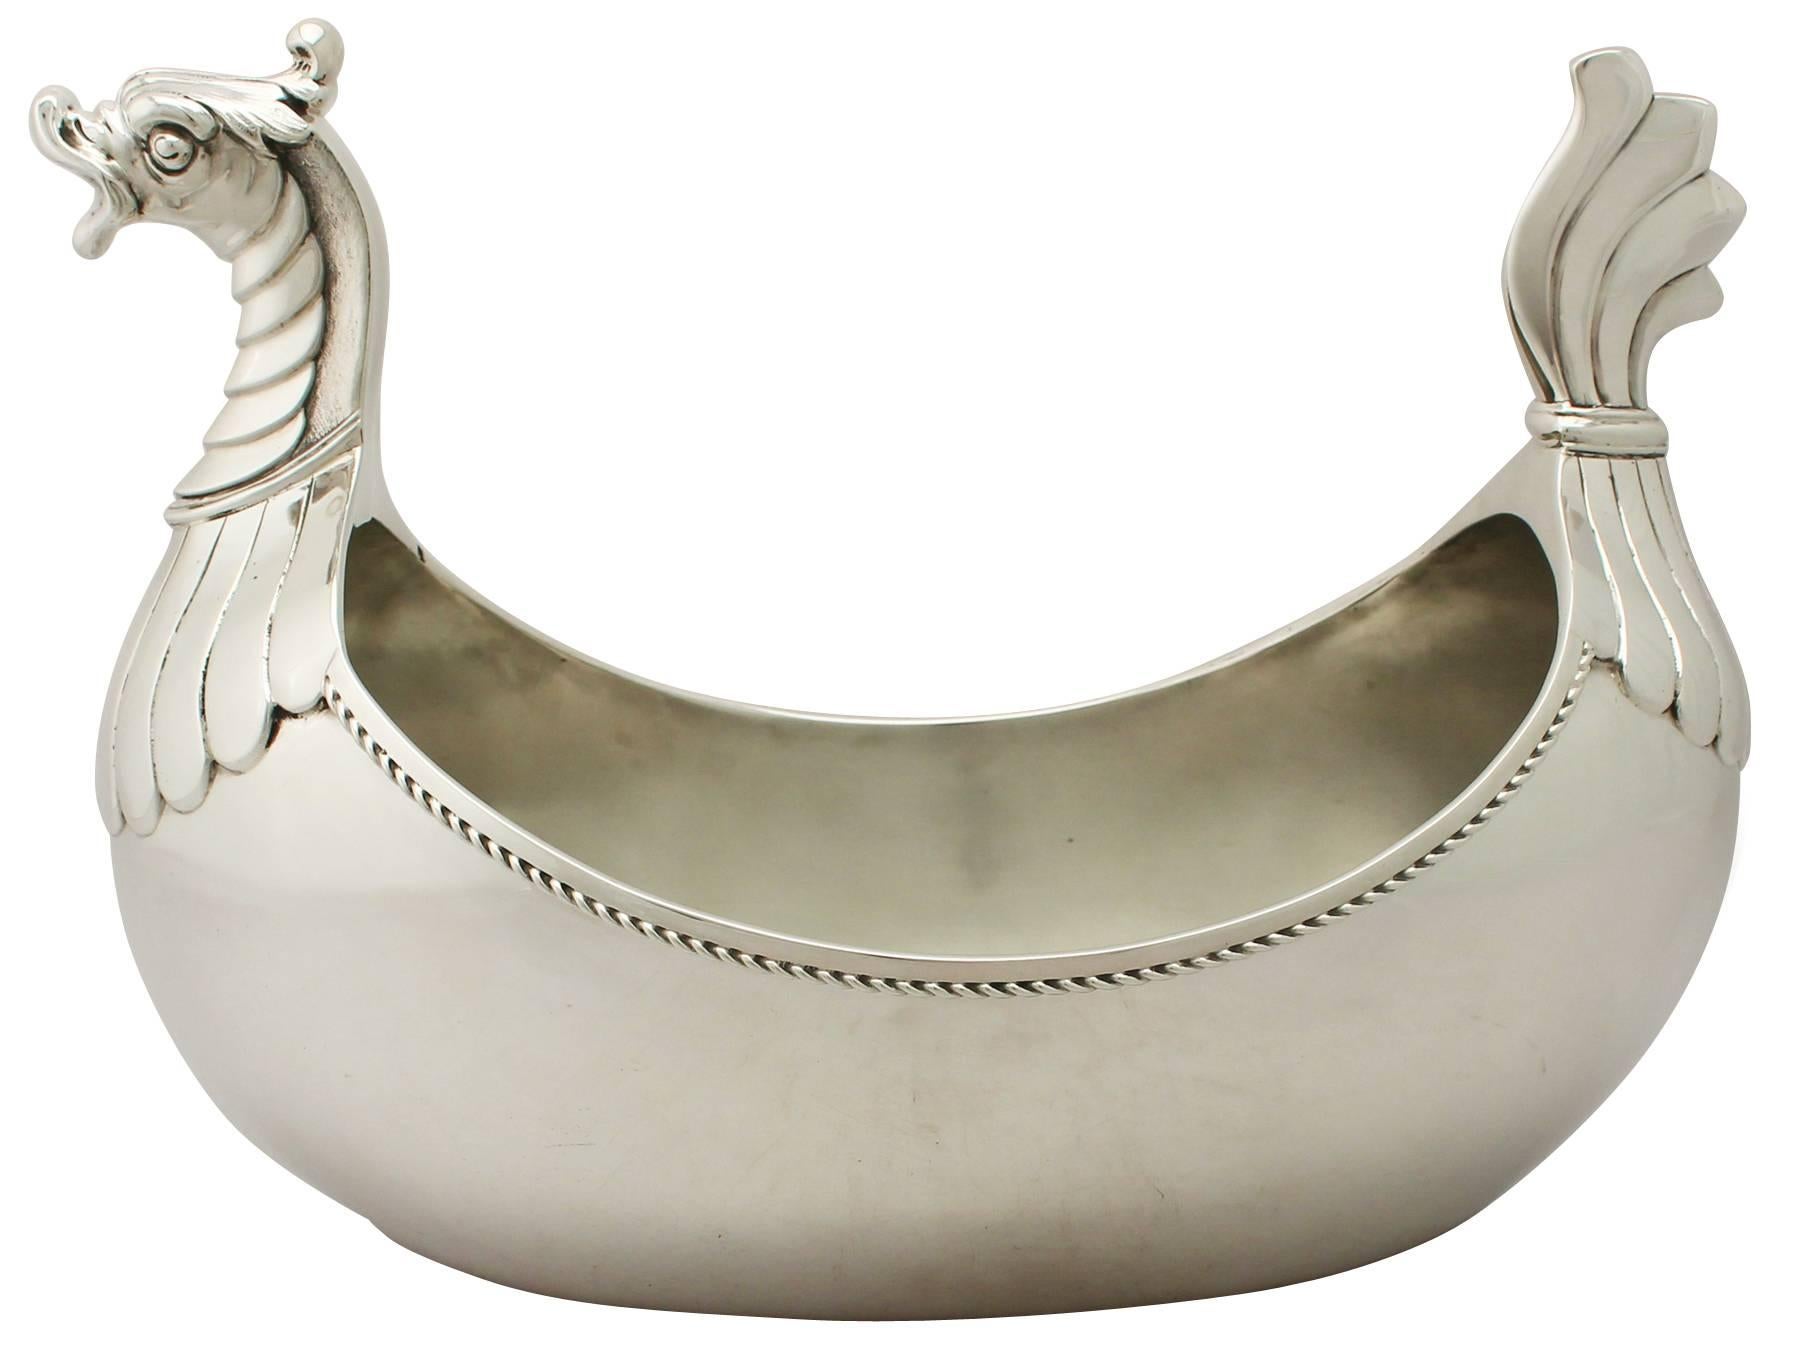 Antique Edwardian Sterling Silver Centrepiece Bowl 1